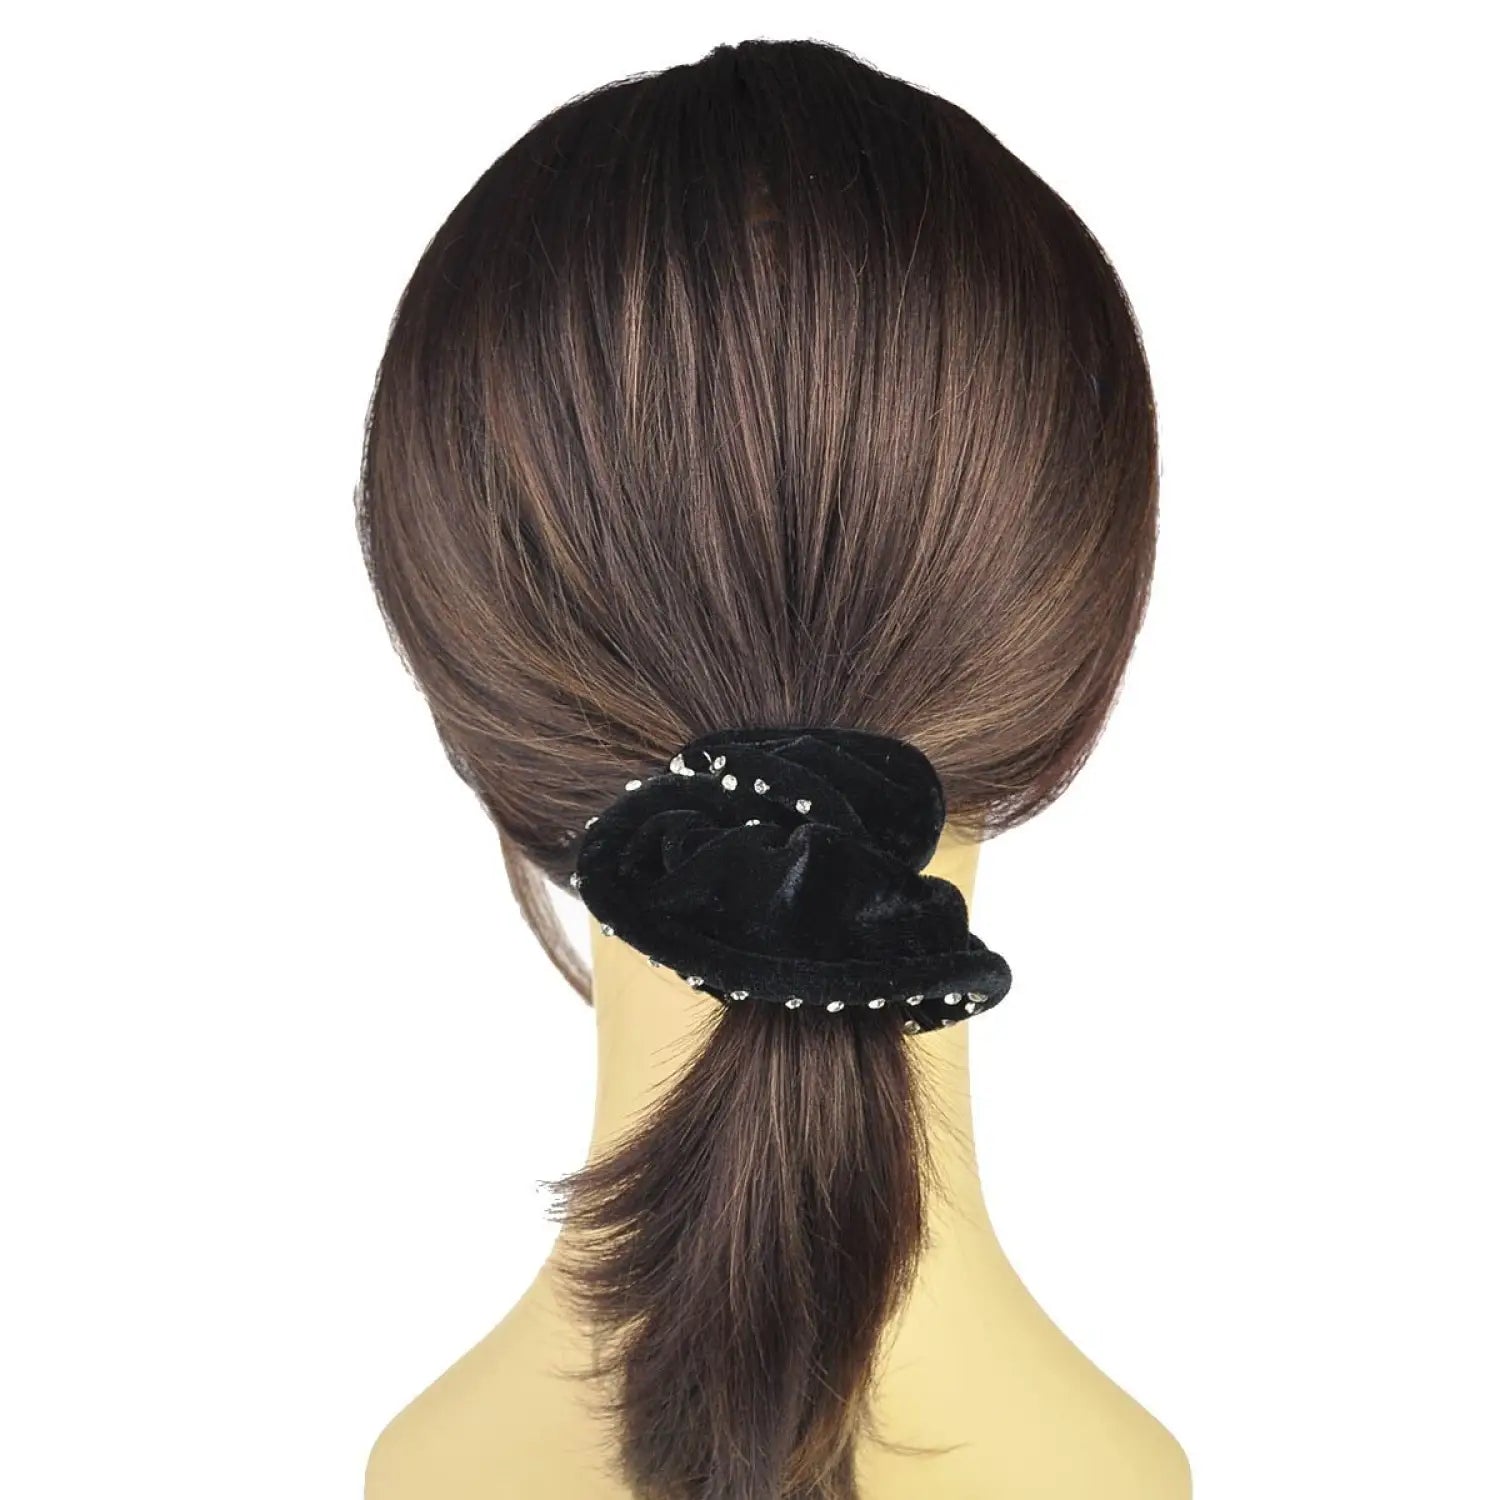 Rhinestone velvet hair scrunchies with flower ponytail accessory